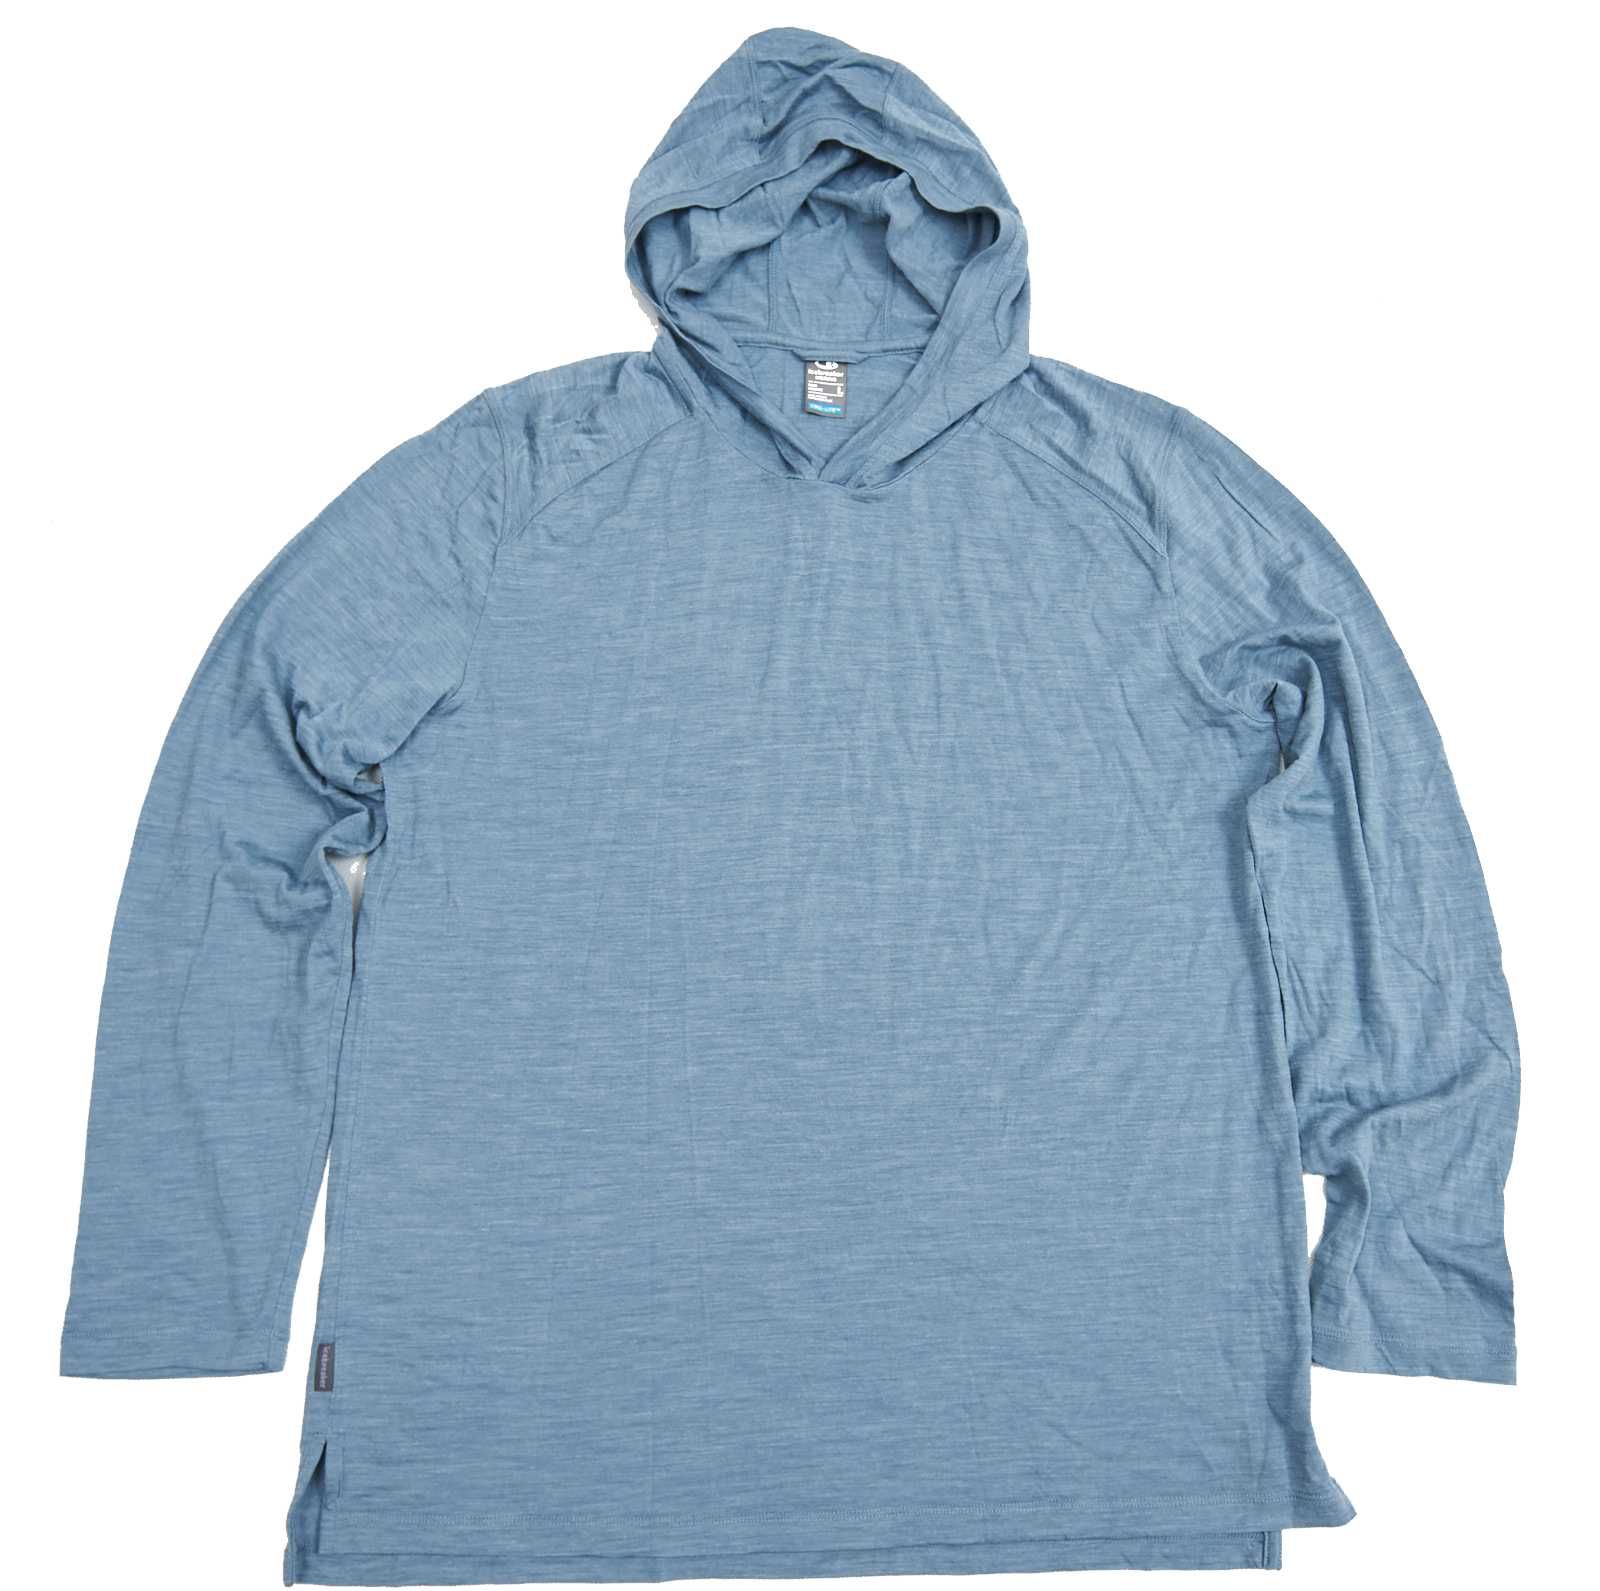 Icebreaker Merino Cool-Lite koszulka Merino Wool size L